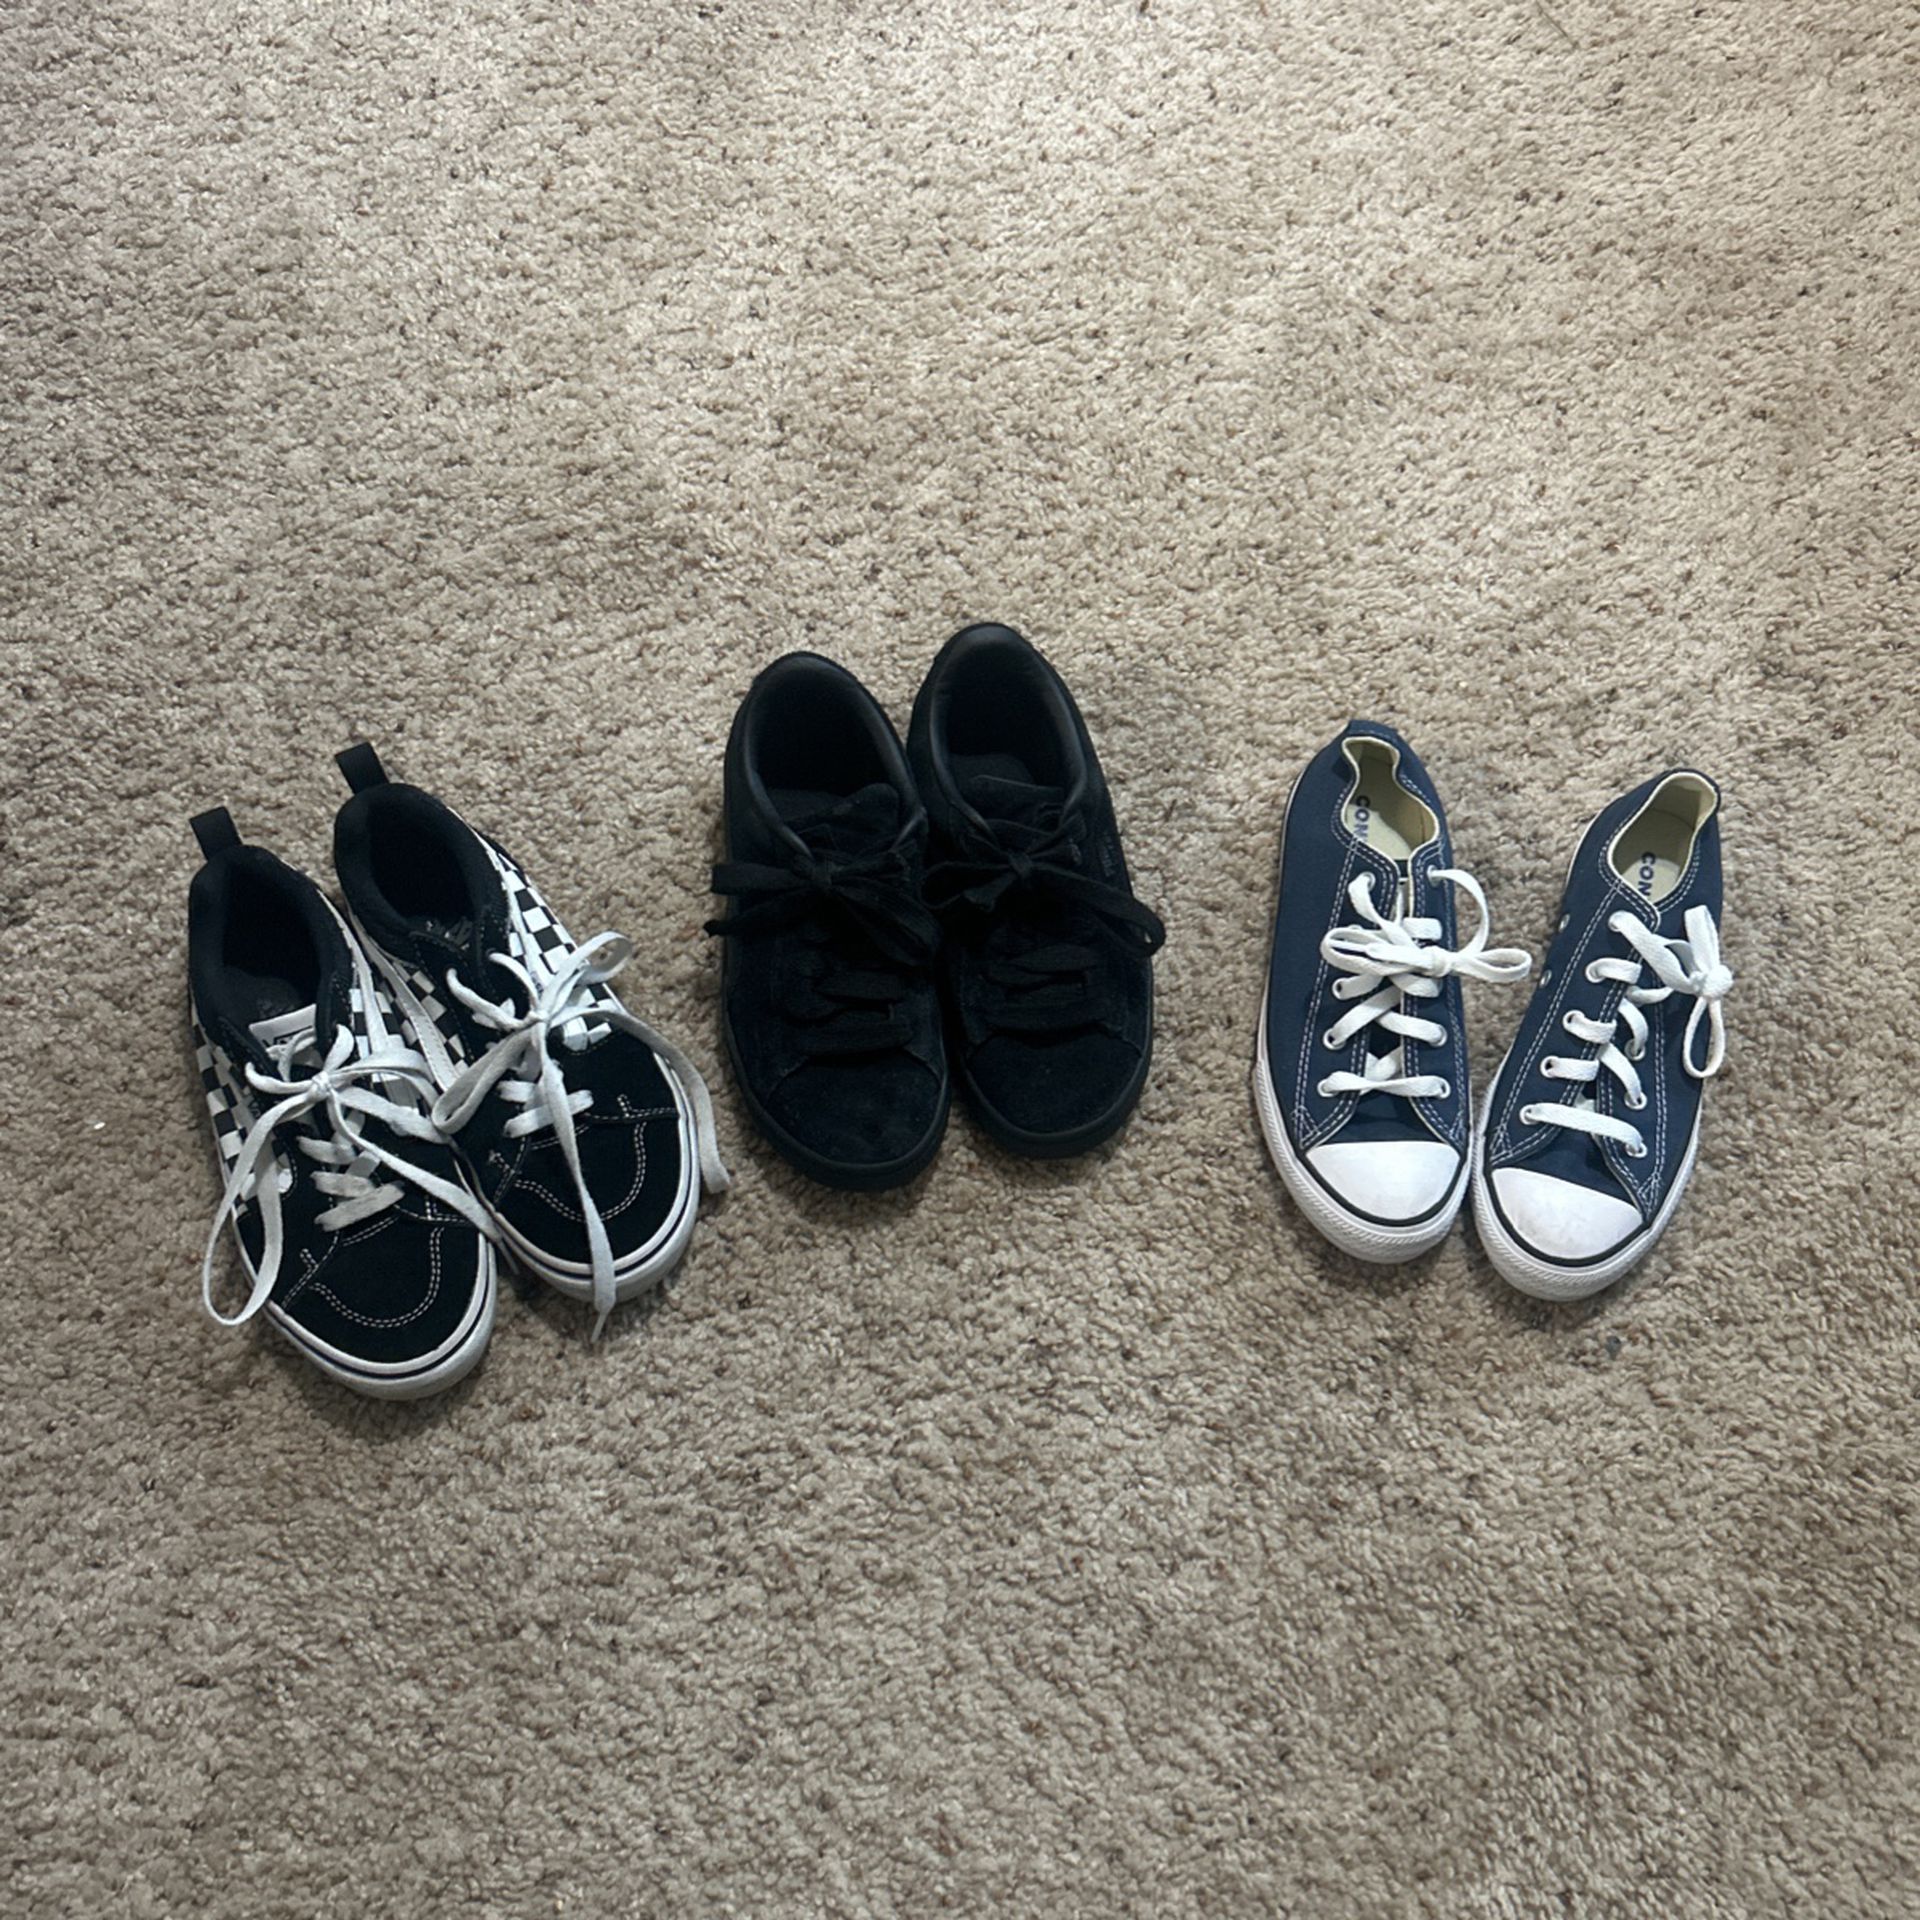 Size 3 Kids Shoes 